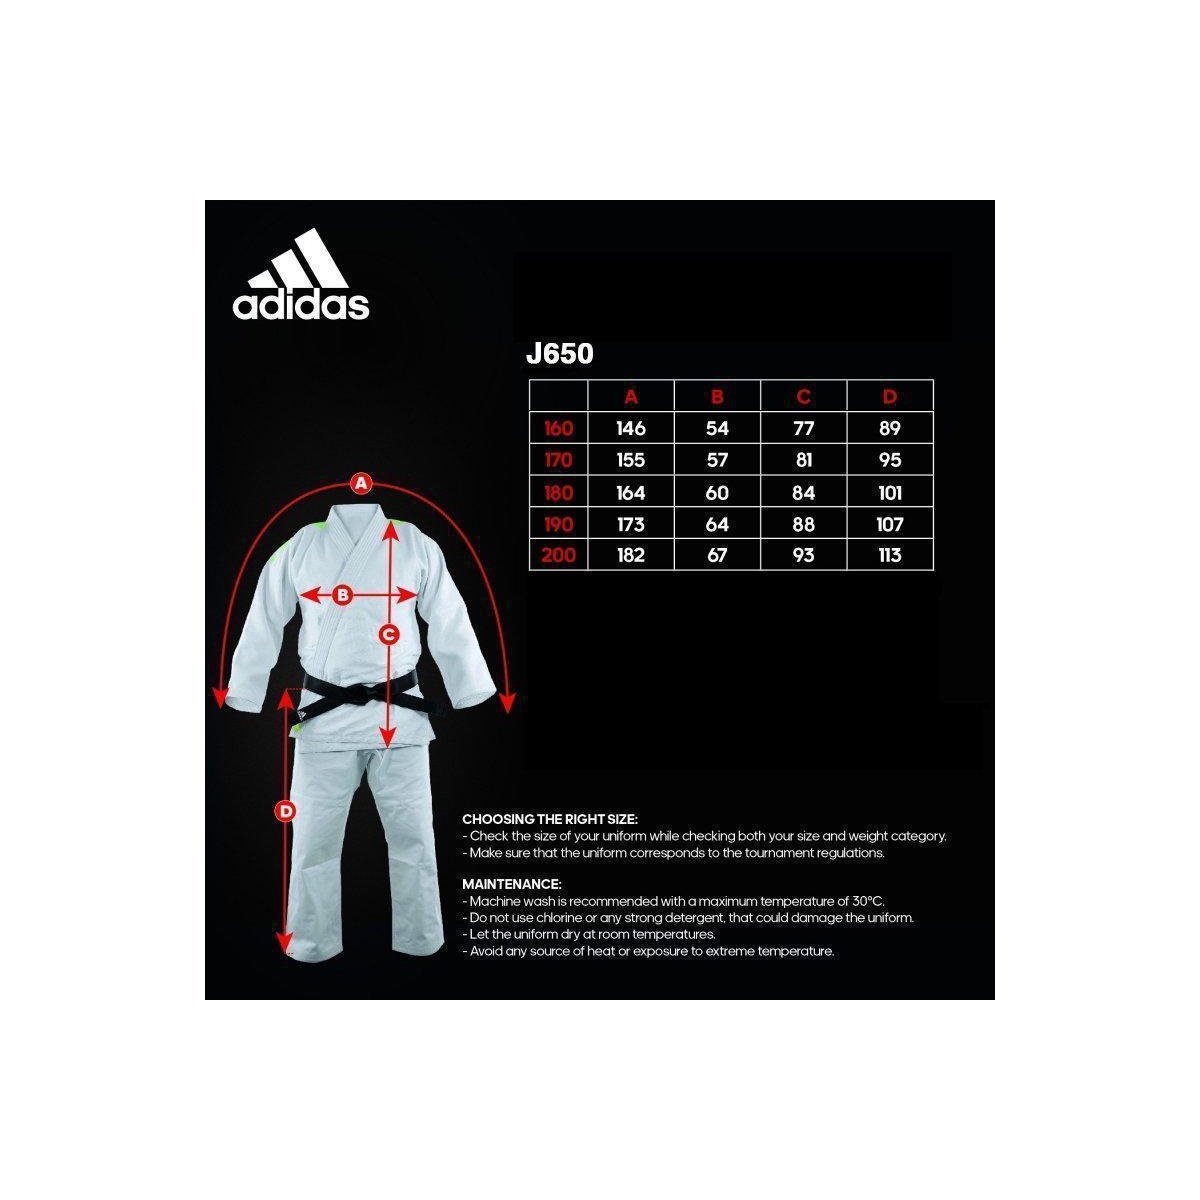 adidas Contest Judo Gi White Suit J650 Double Weave 23oz - Budo Online